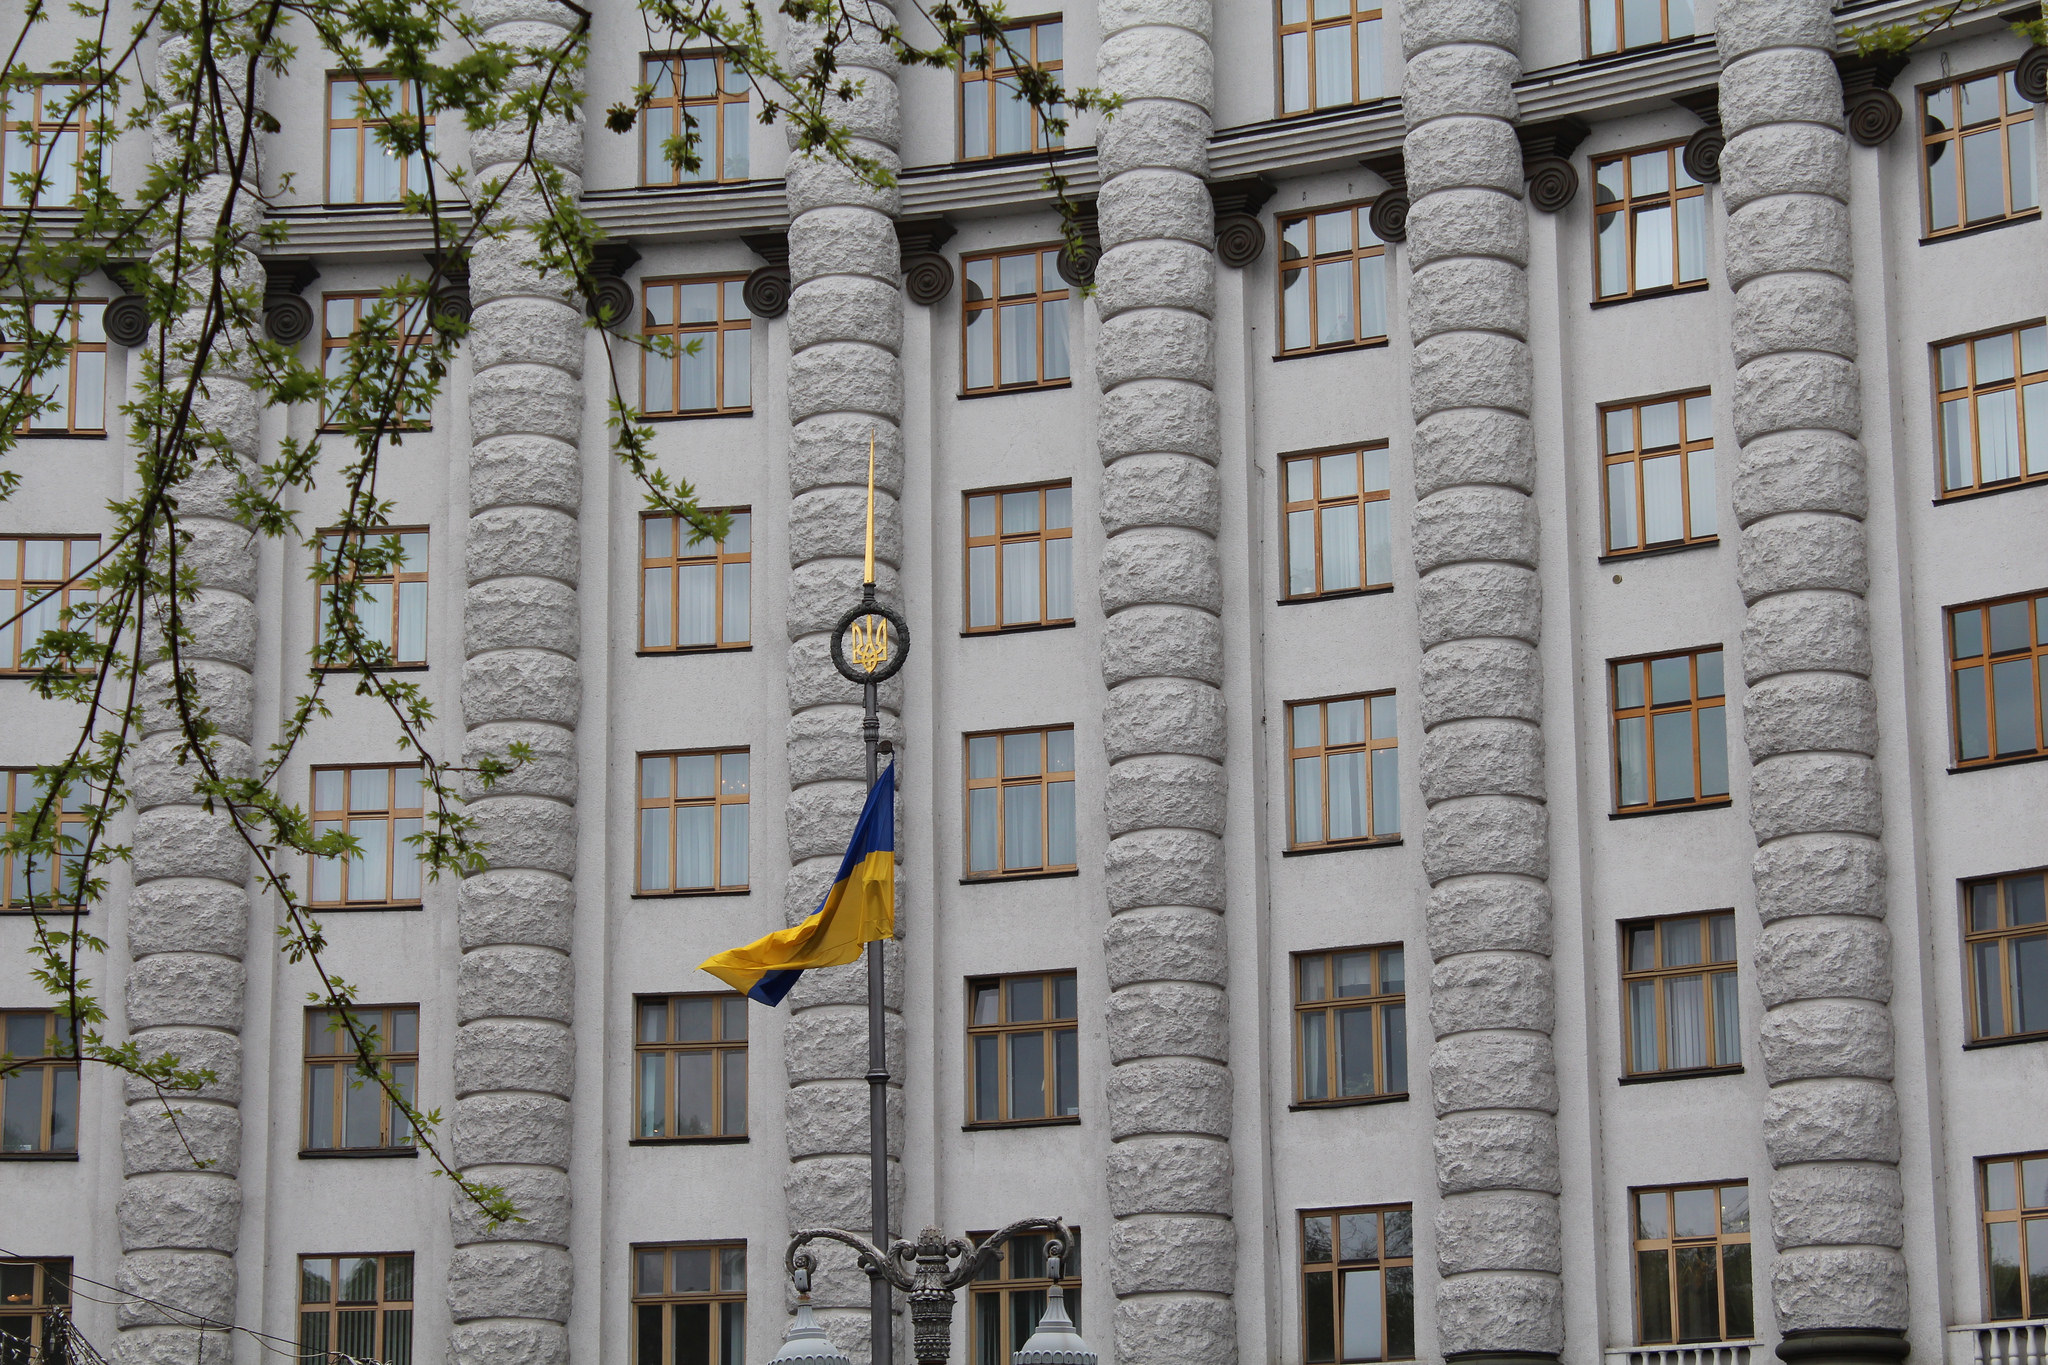 British Embassy in Ukraine via flickr